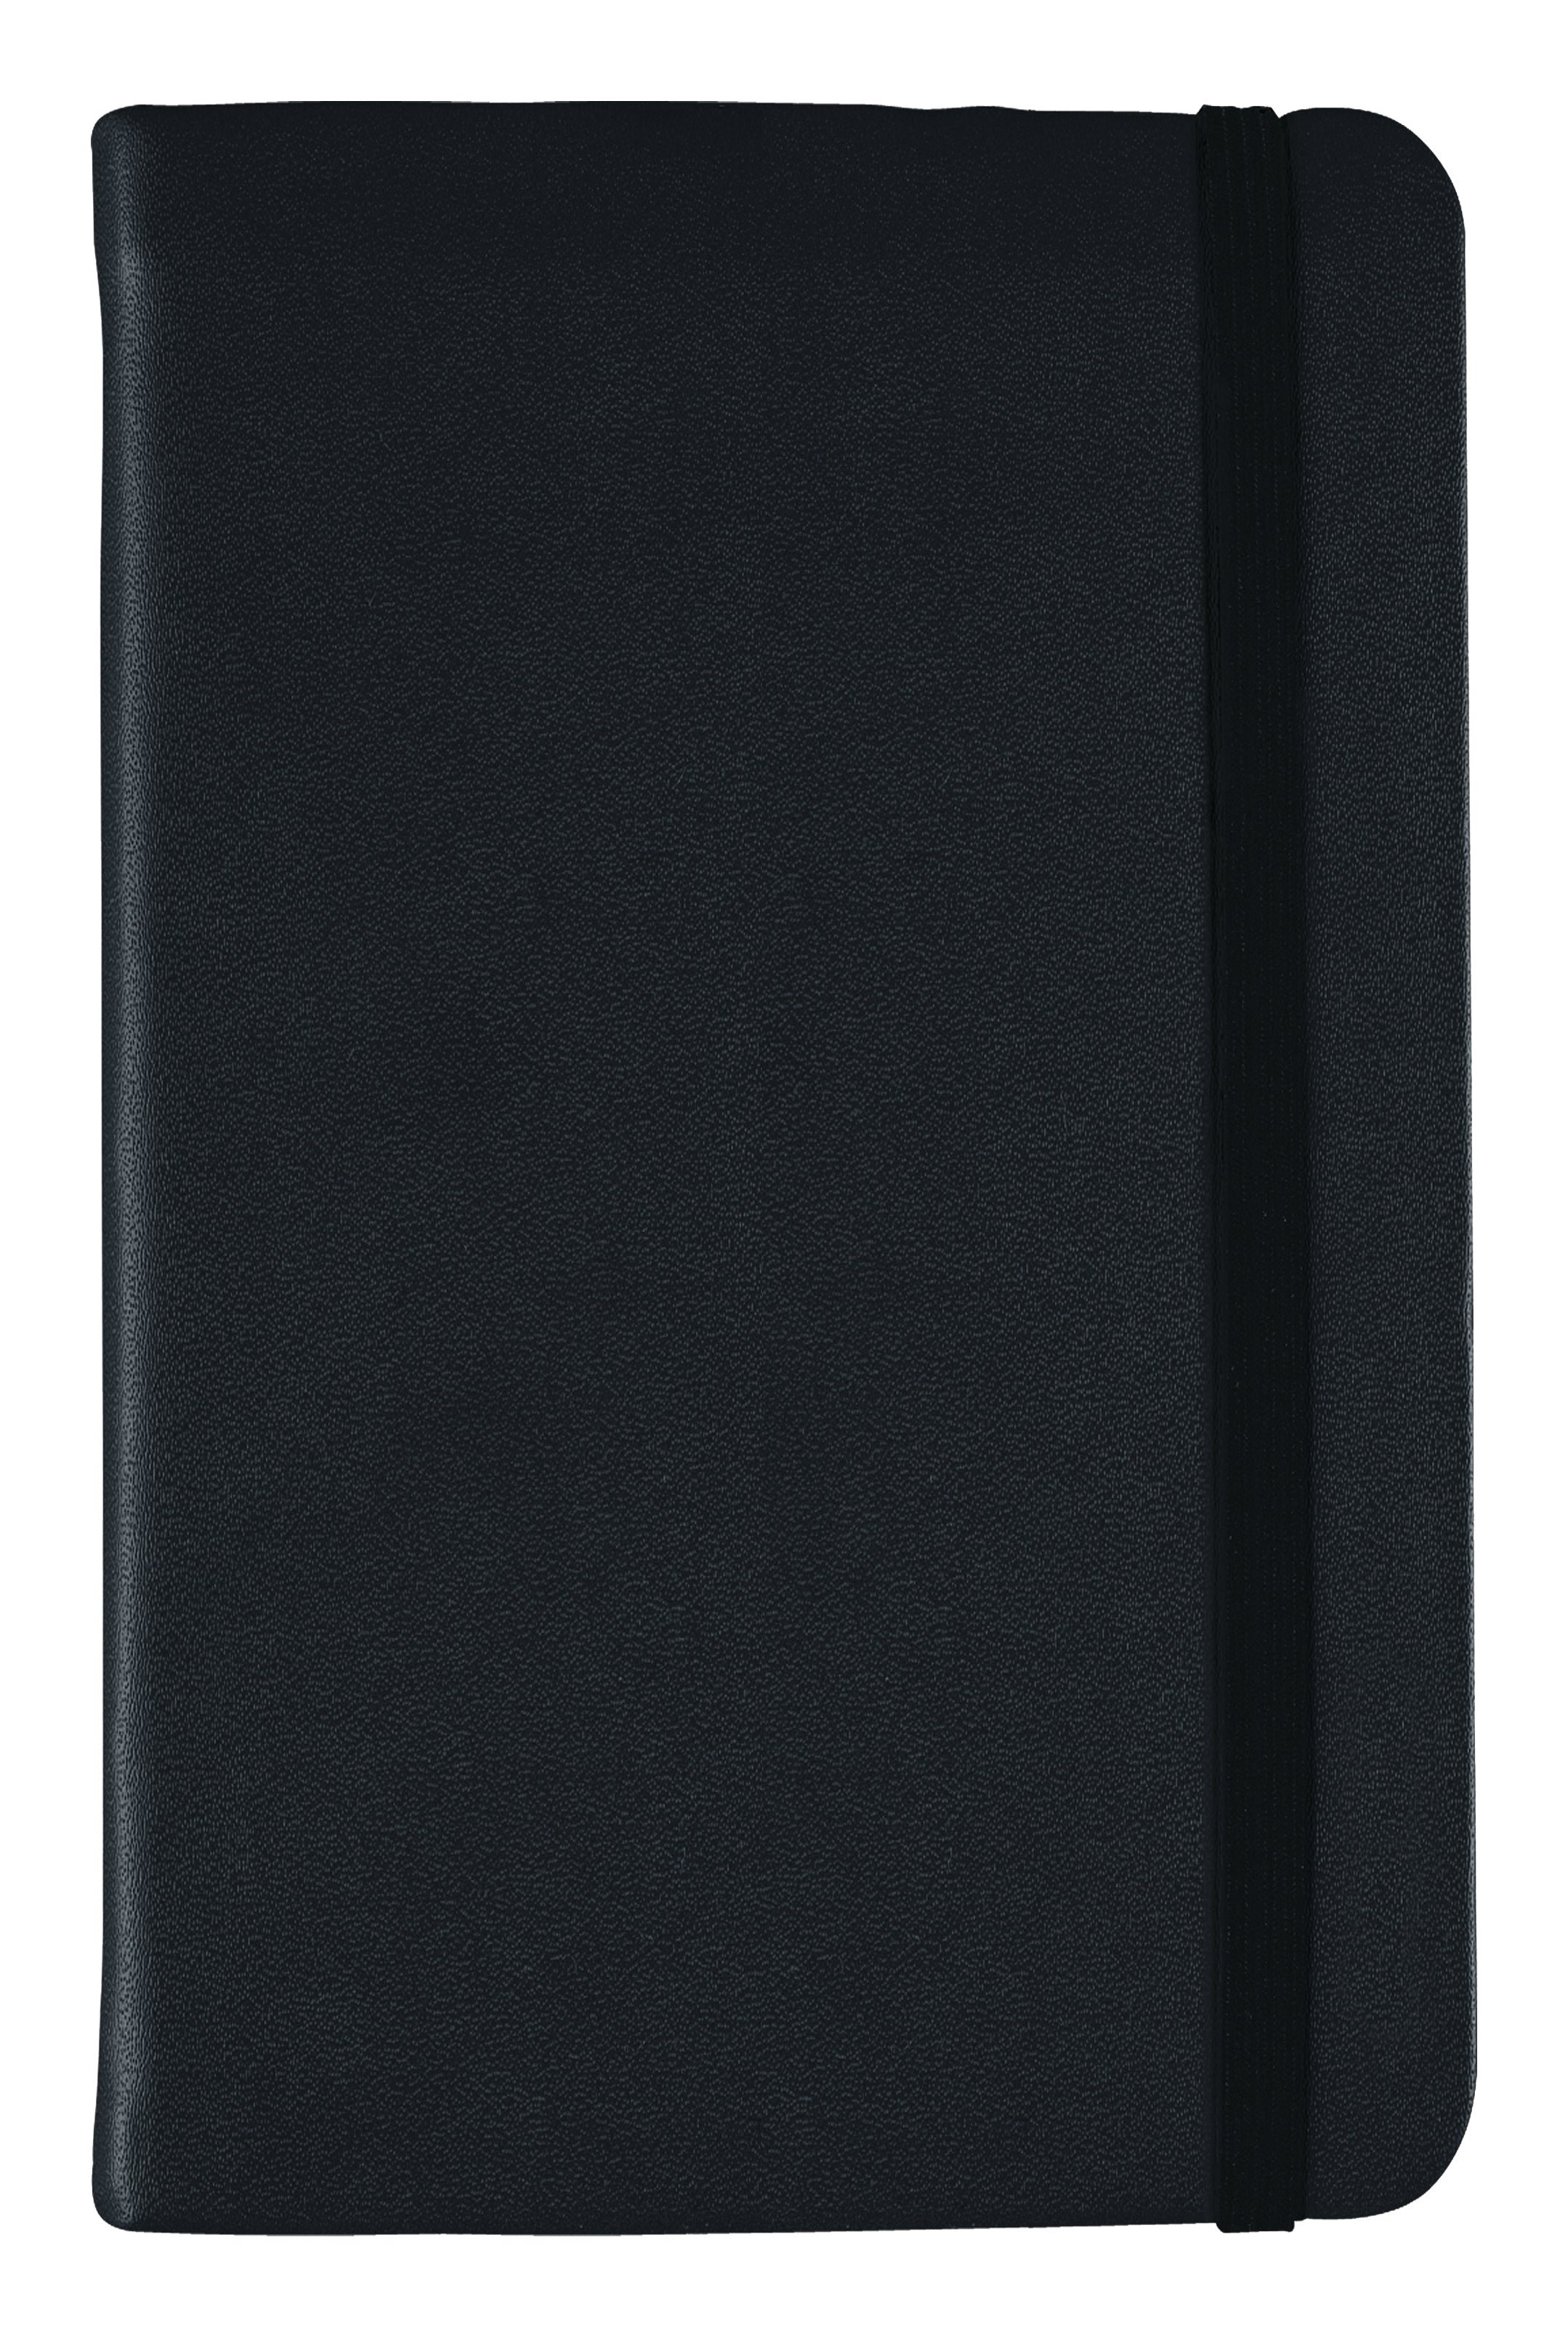 Vauxhall A5 Notebook Ruled Black